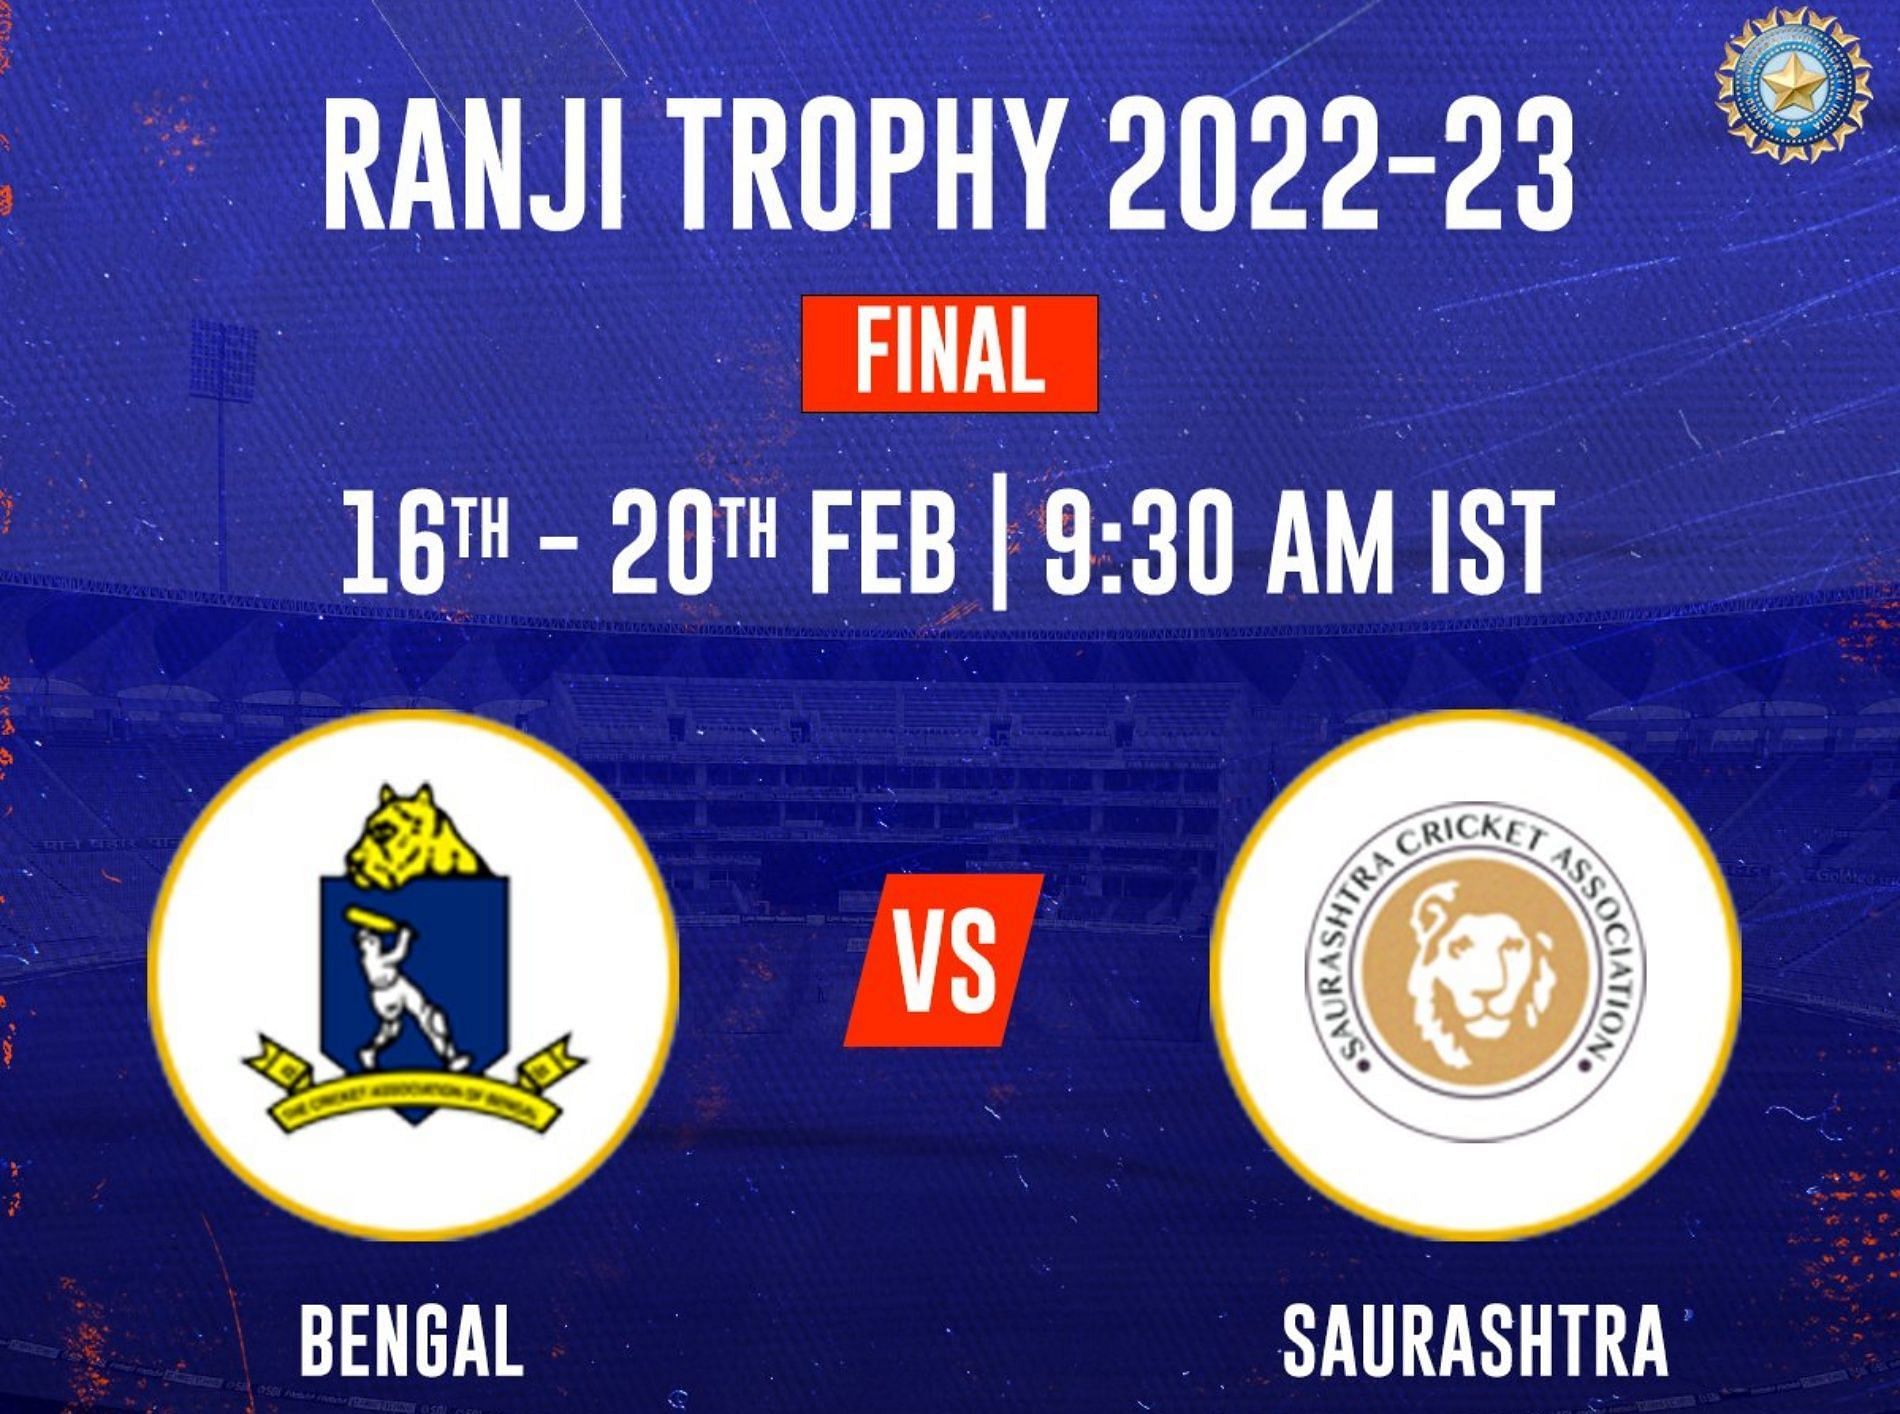 Bengal vs Saurashtra, Ranji Trophy 2022-23 final